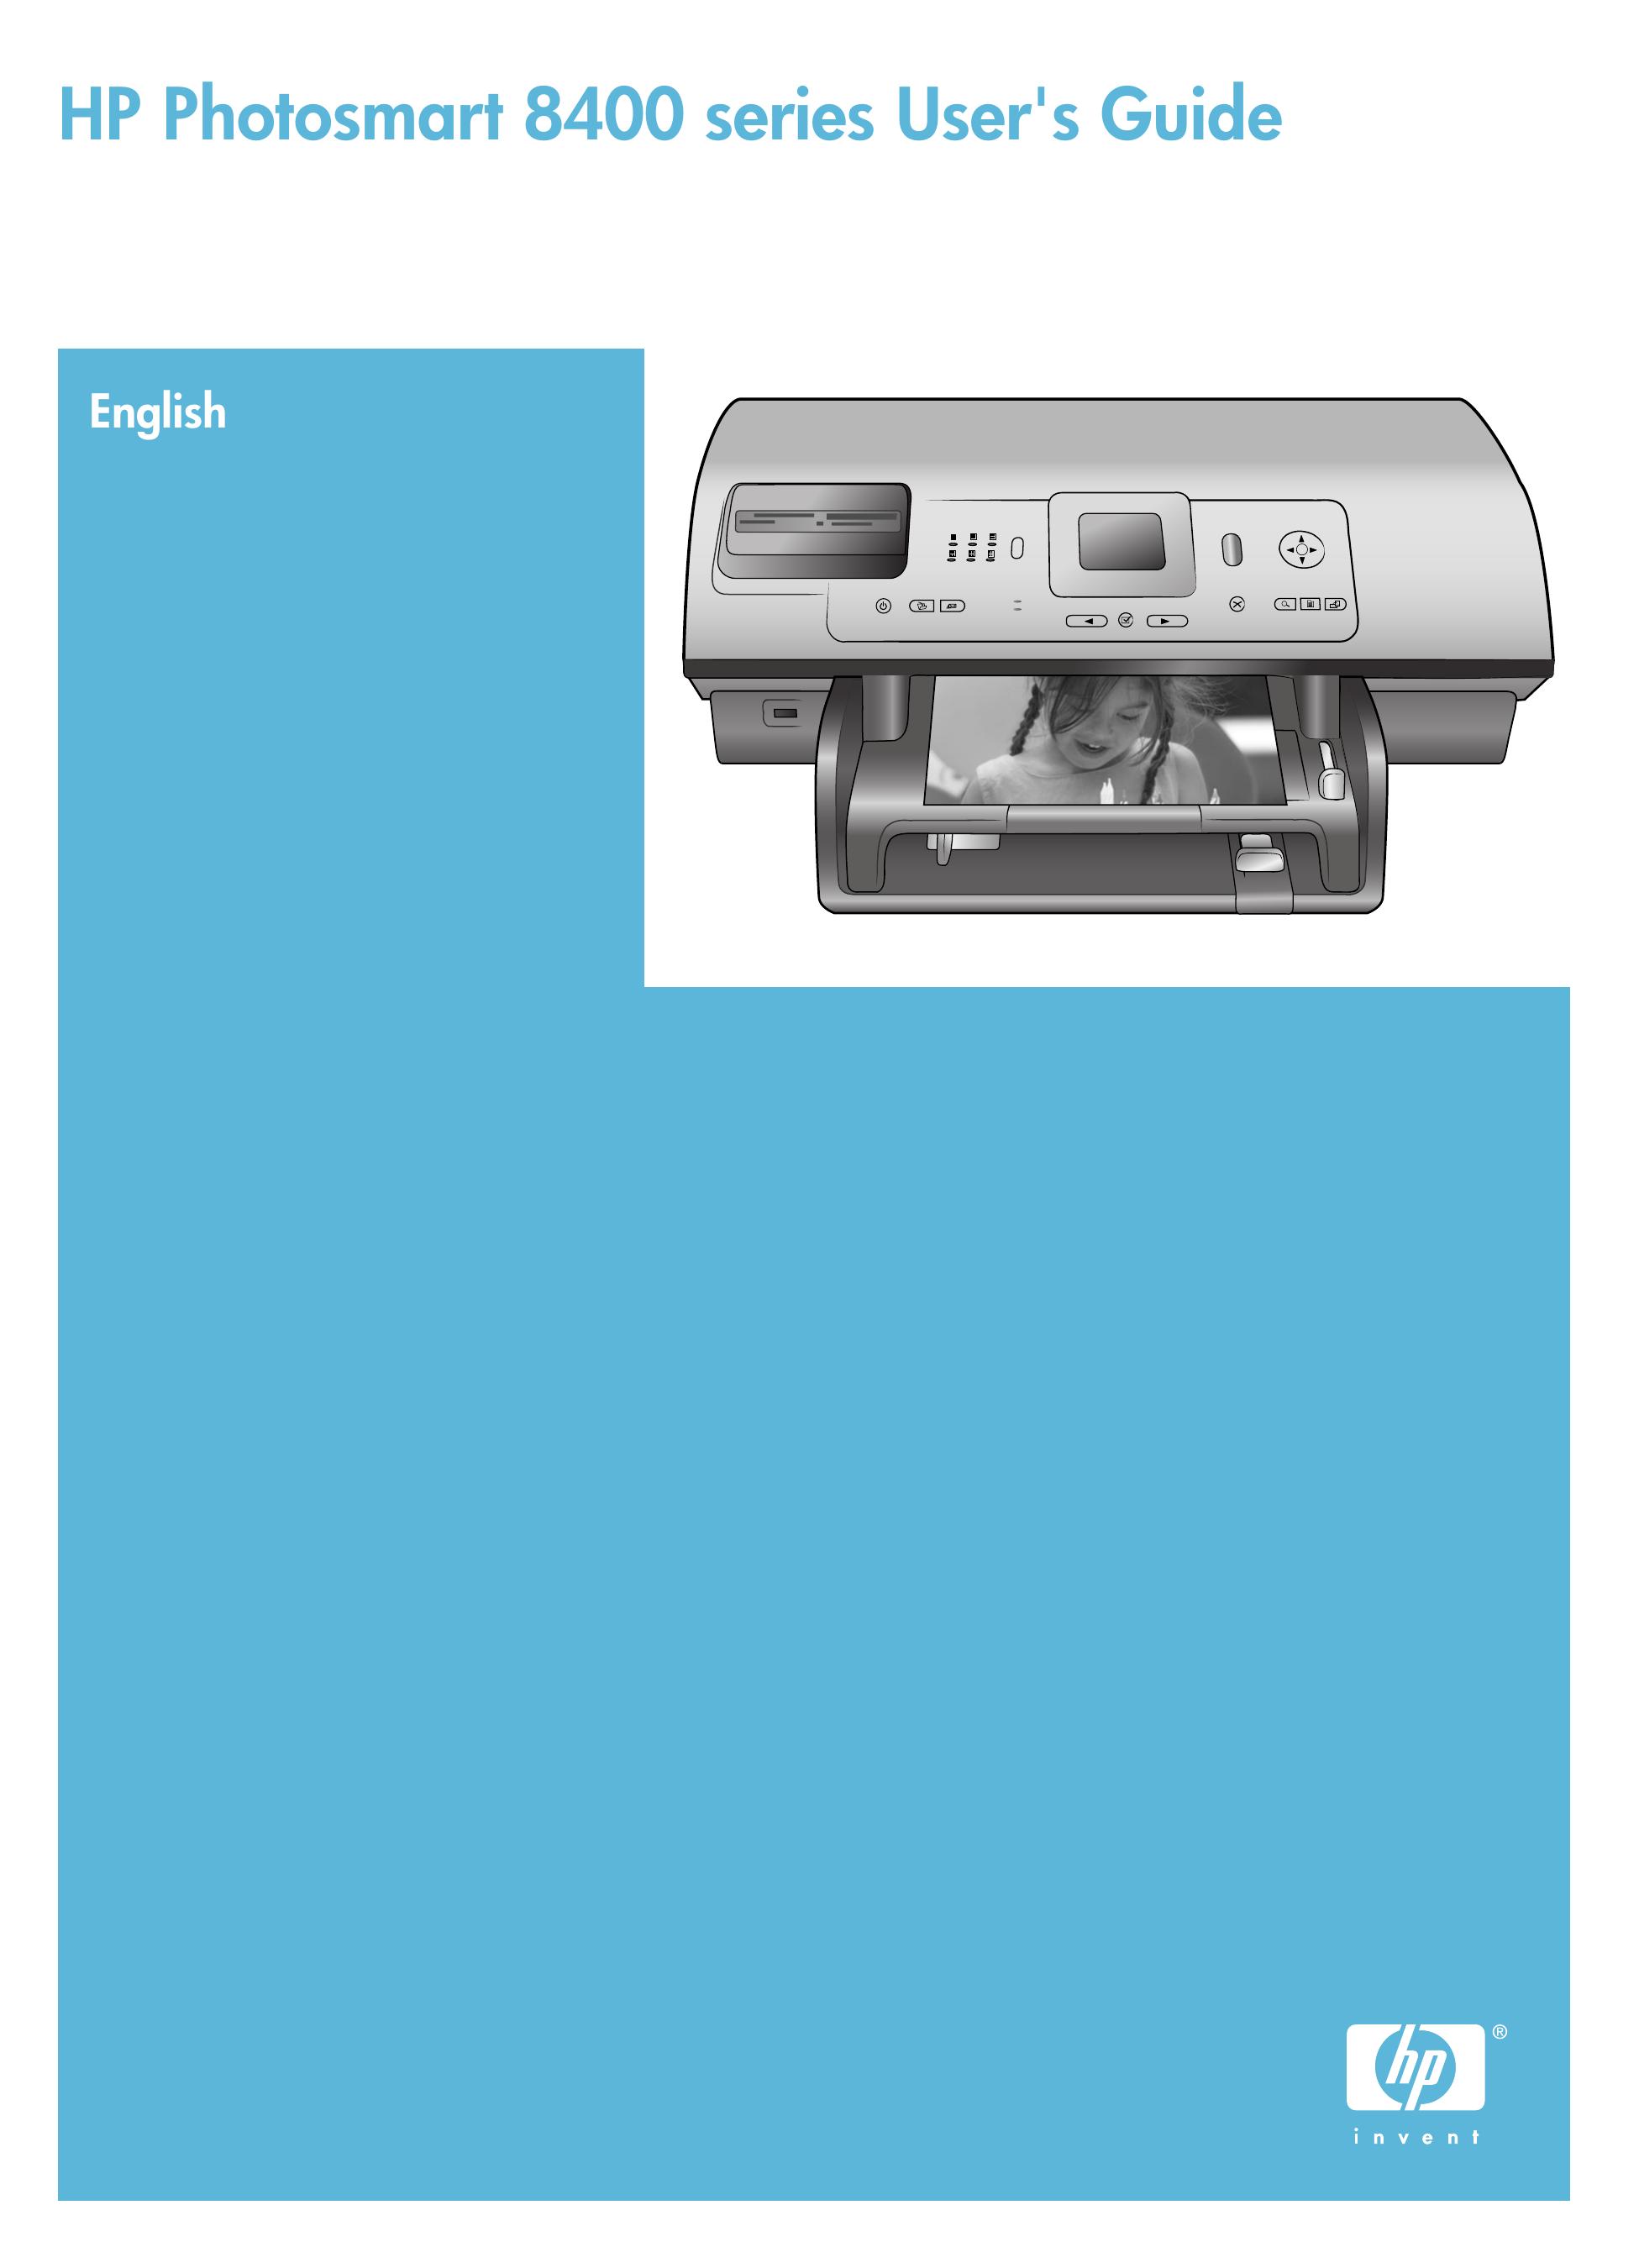 HP (Hewlett-Packard) 8400 Series Photo Printer User Manual